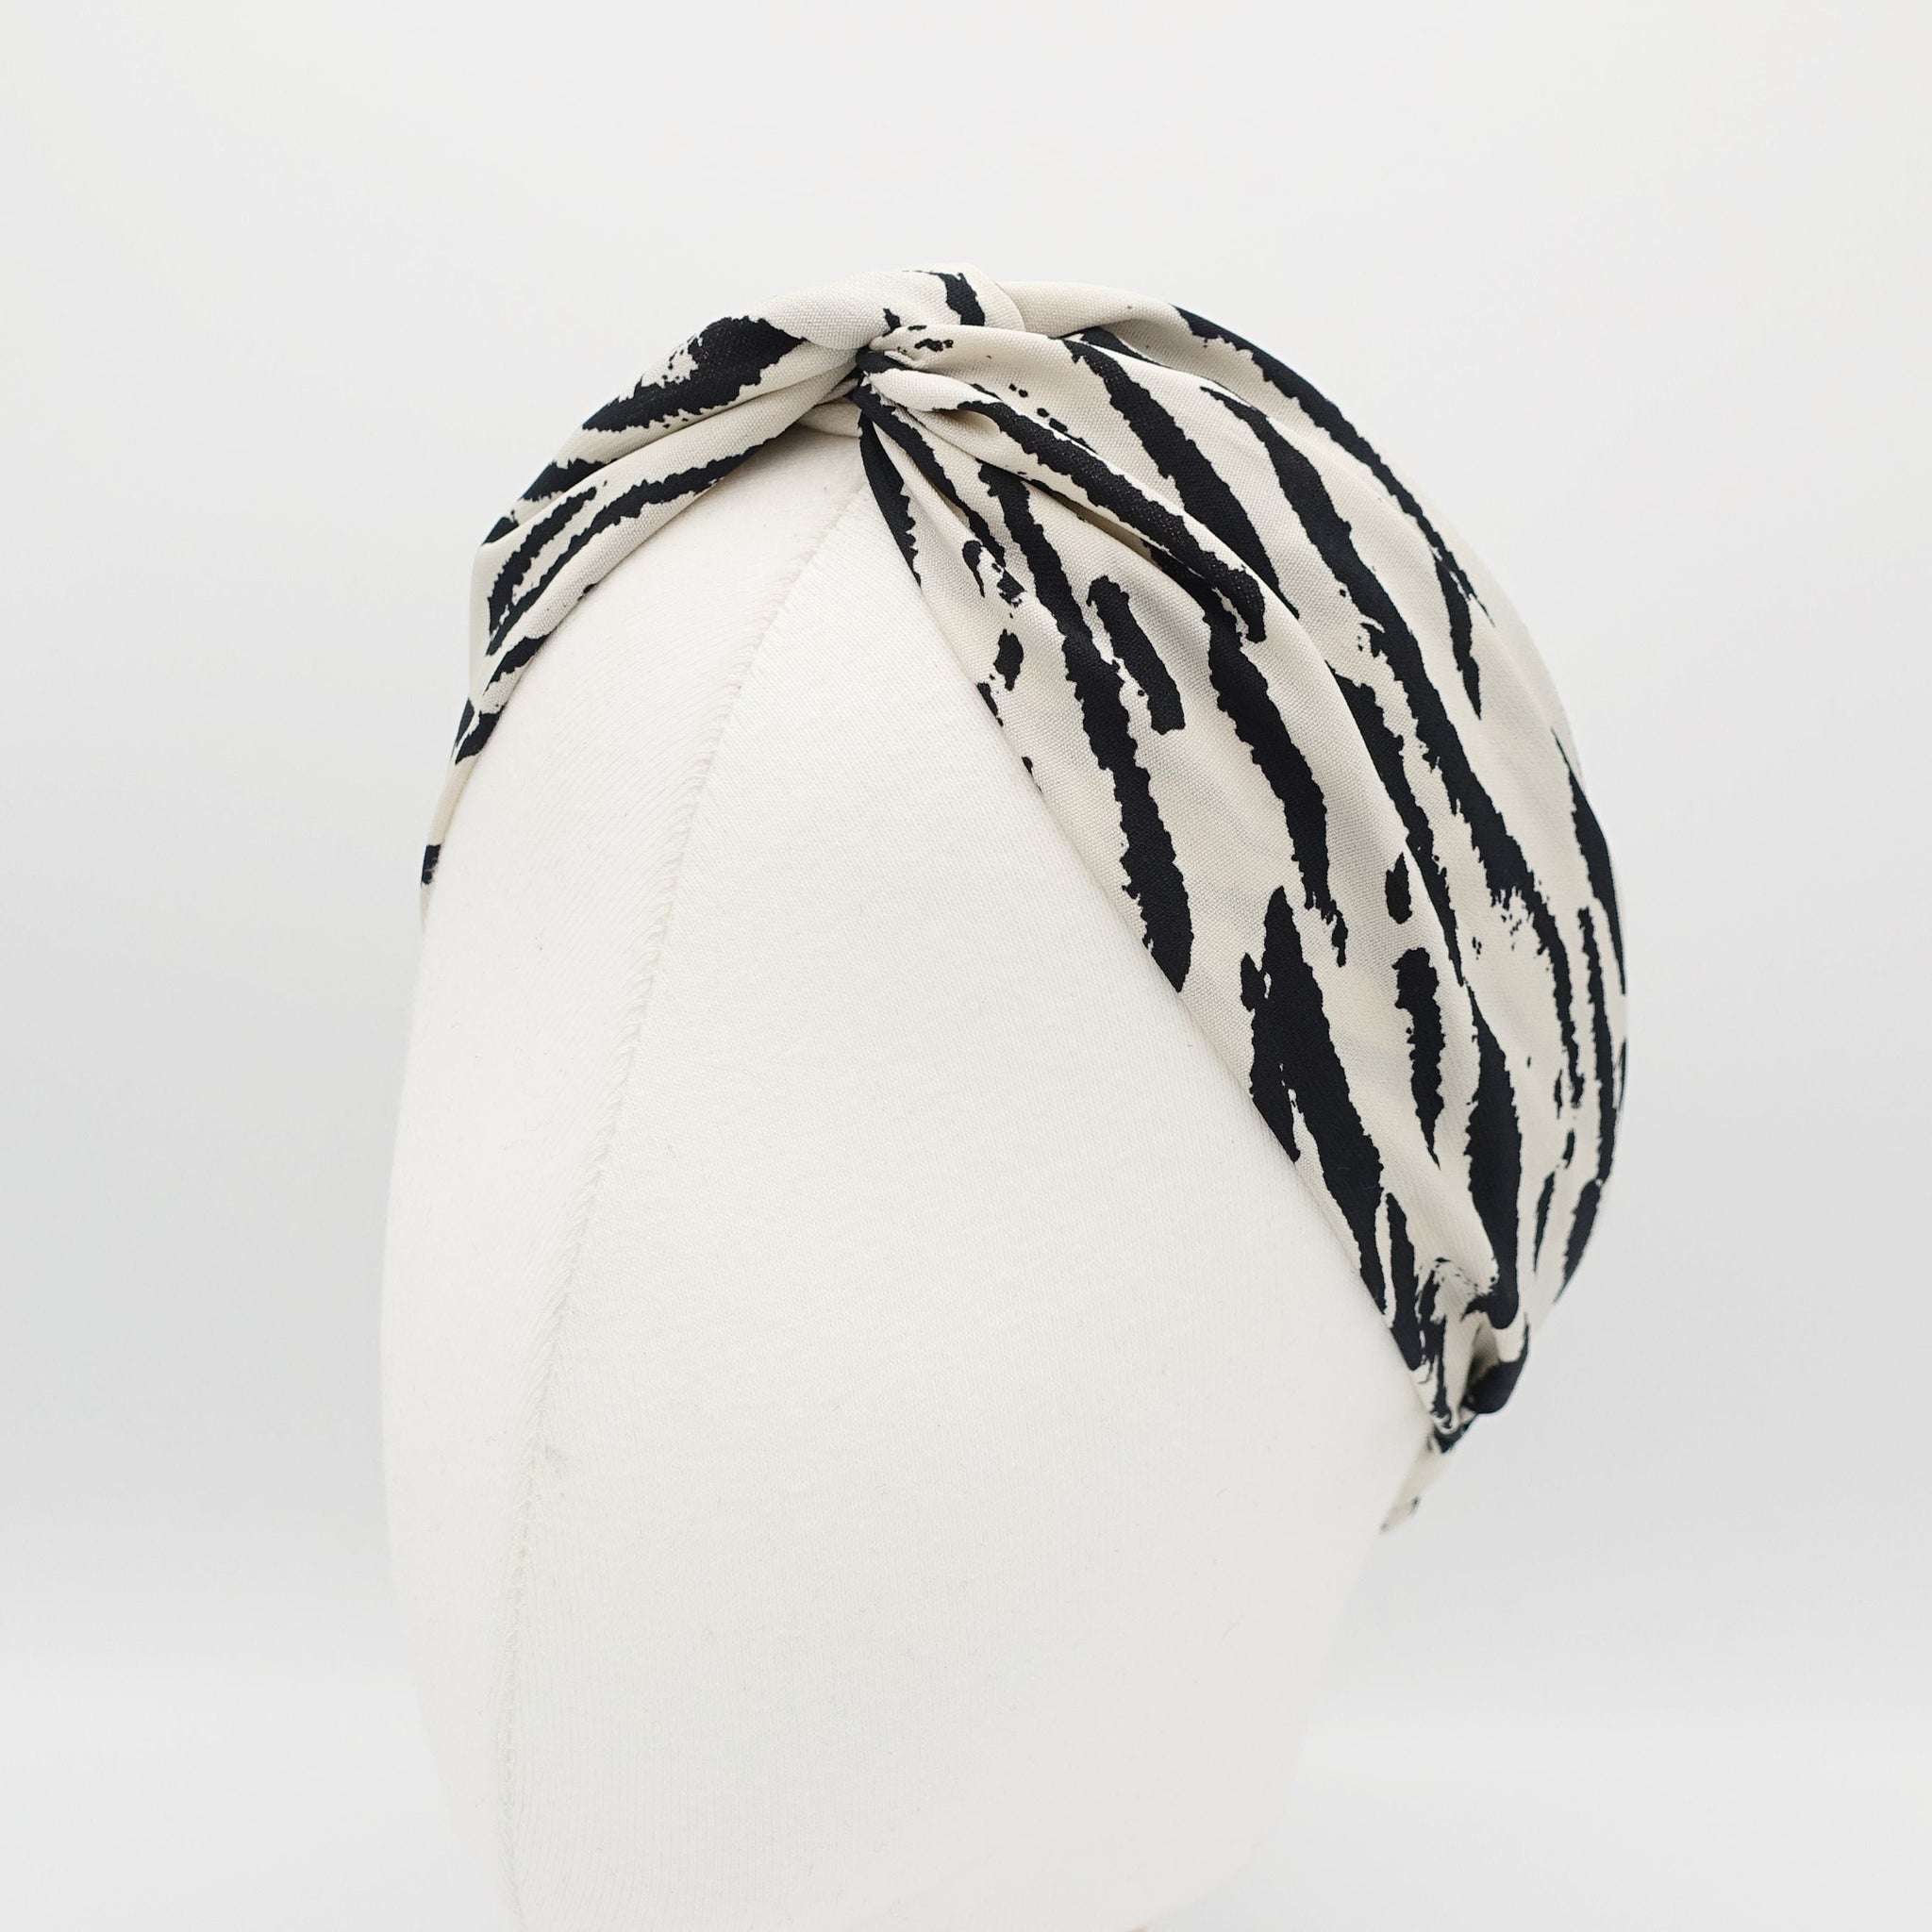 veryshine.com Headband zebra print turban headband cross headband women hair accessory